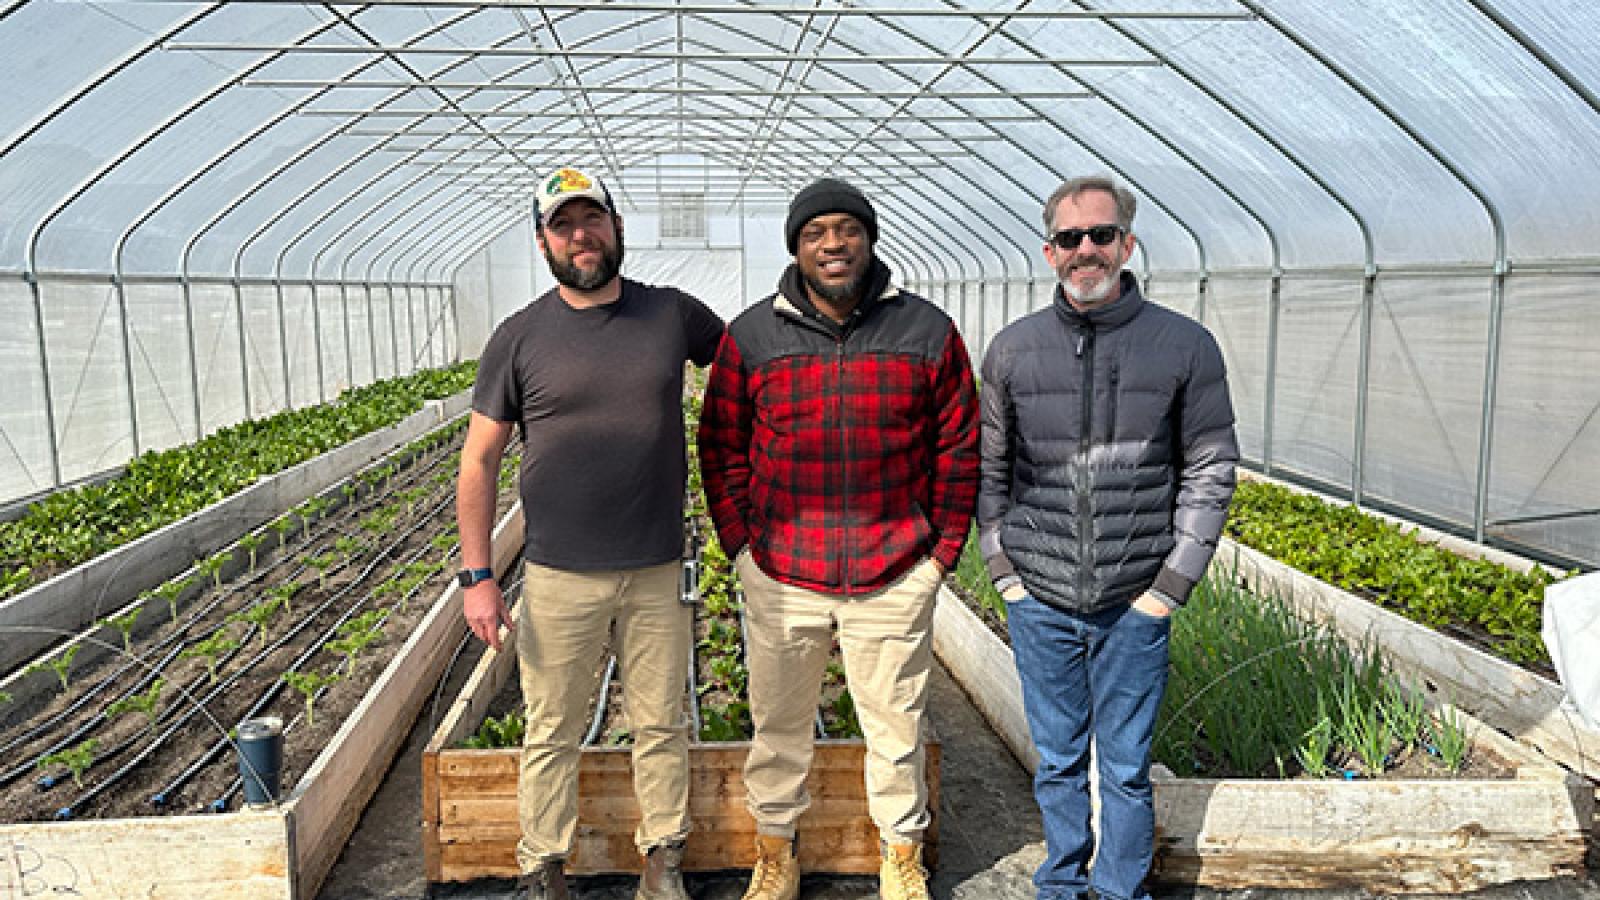 Daniel Neef, Walt Bonham, and Kip Curtis pose for a photo at the NECIC Urban Farm in Mansfield, OH